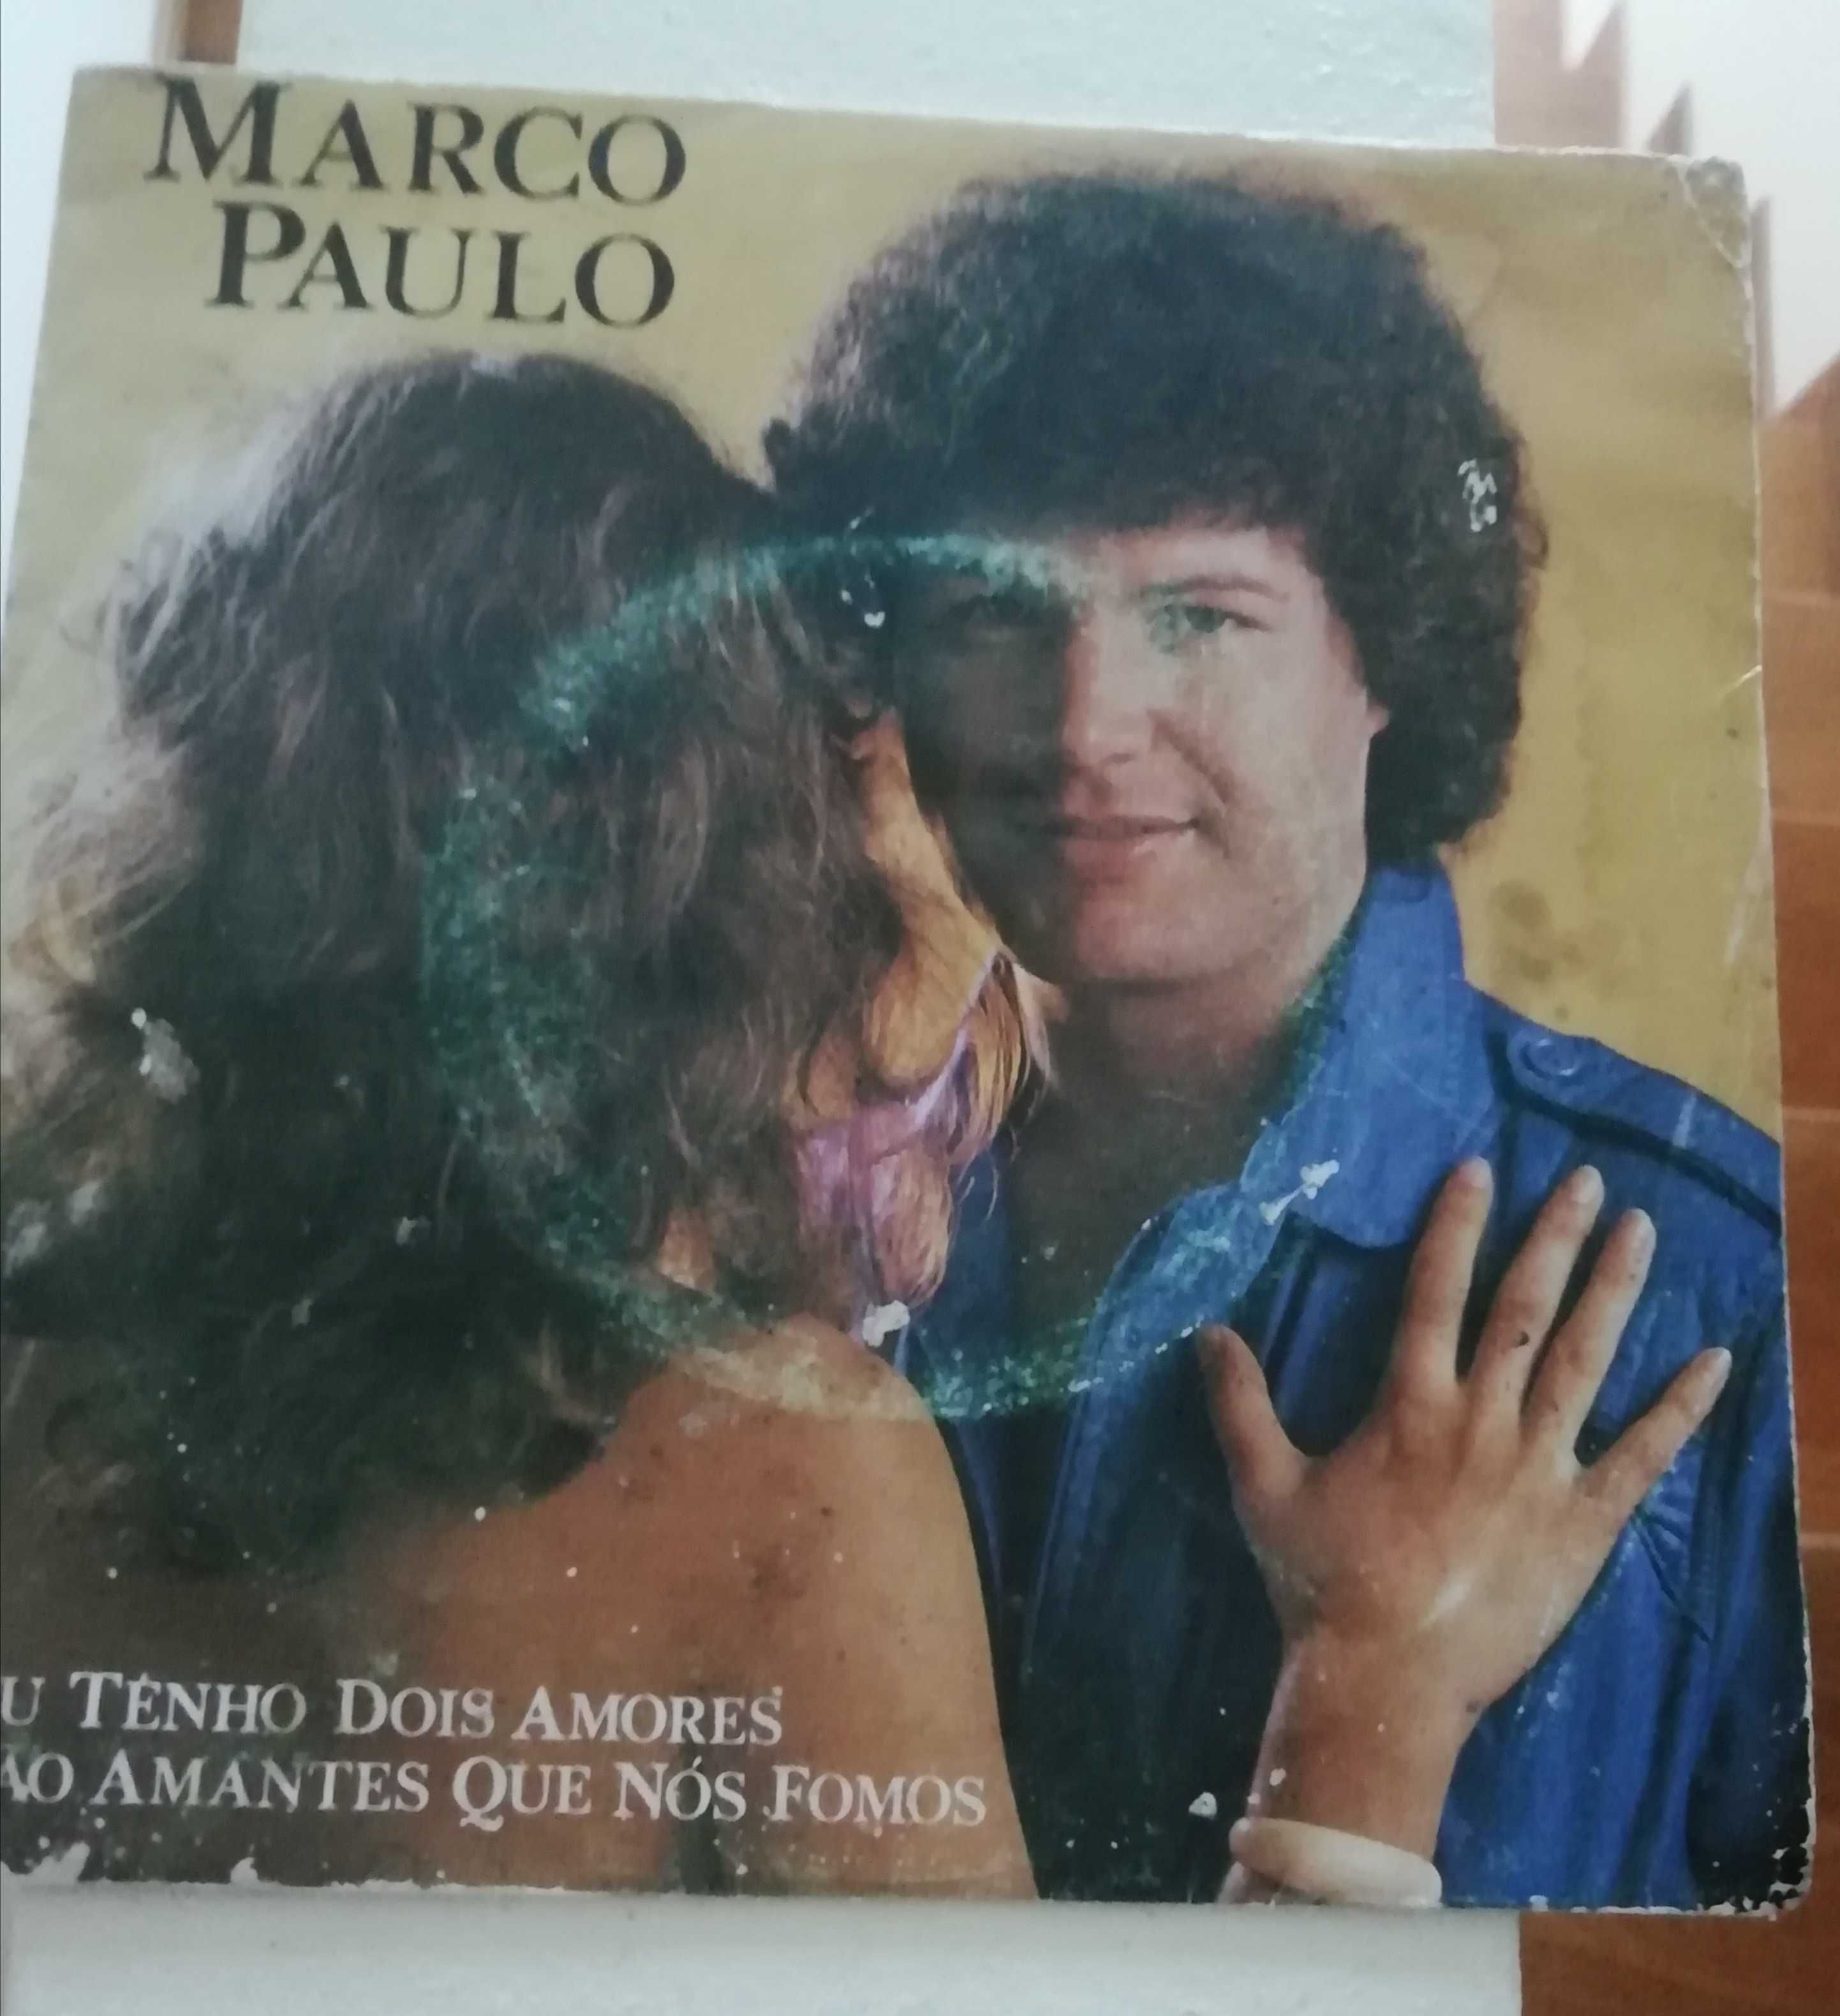 Disco de Vinil do Marco Paulo